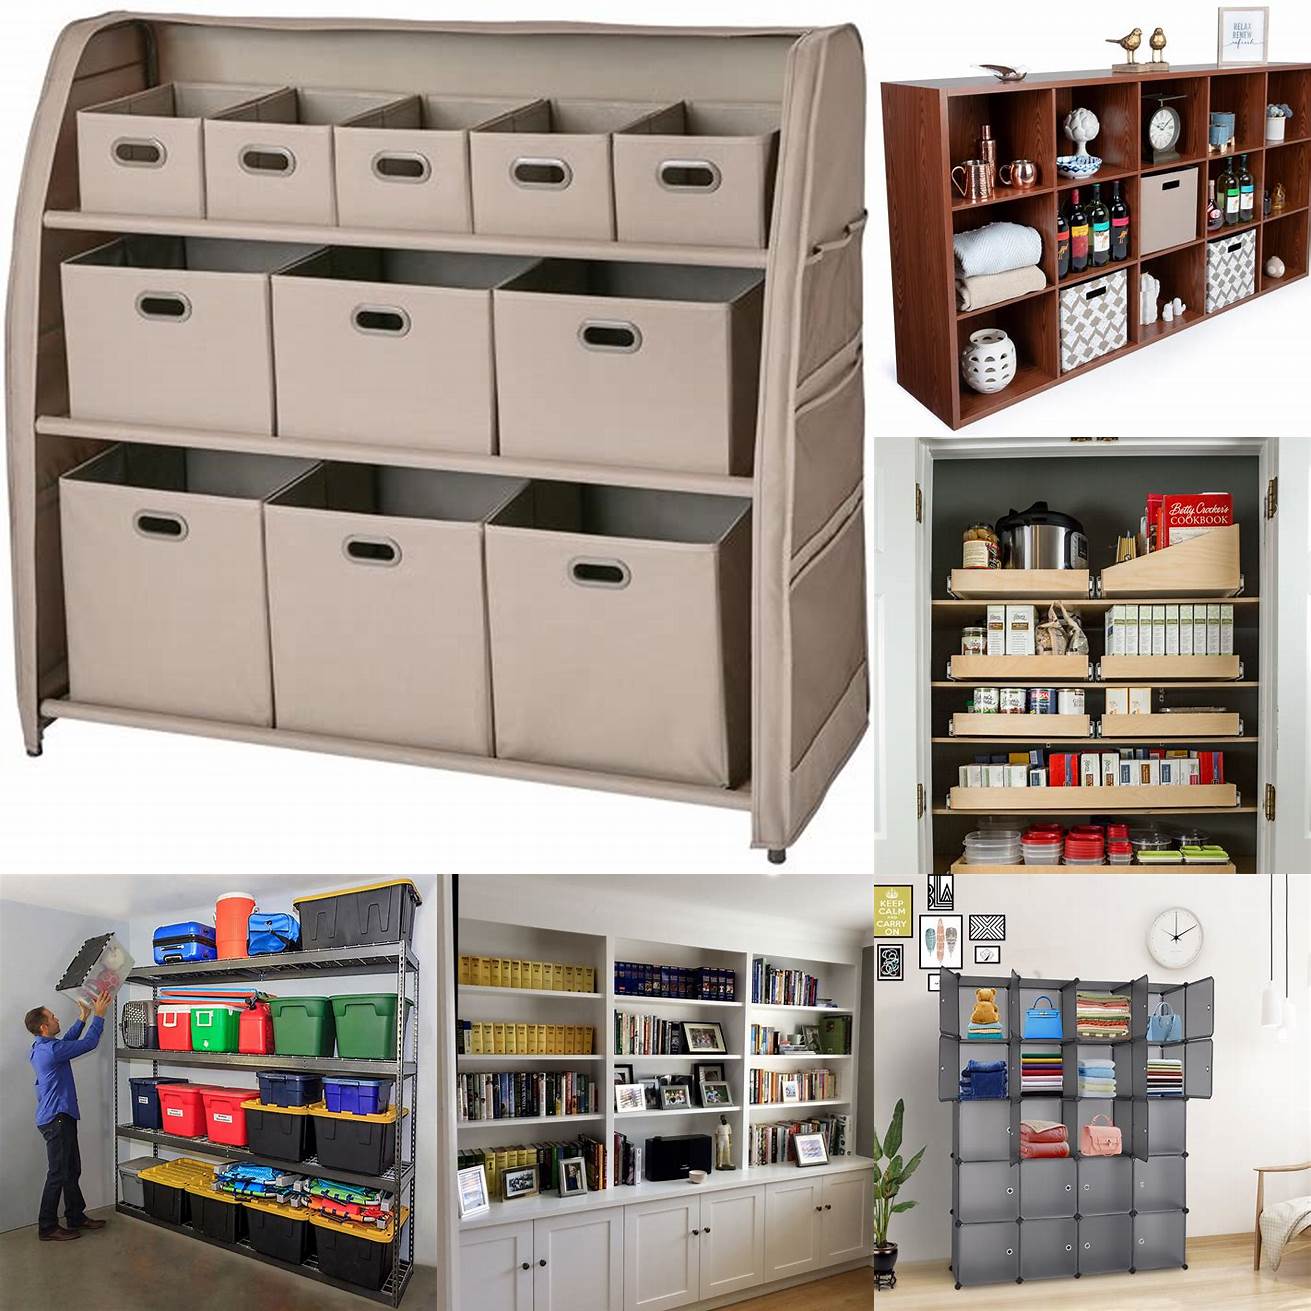 3 Organizational storage units